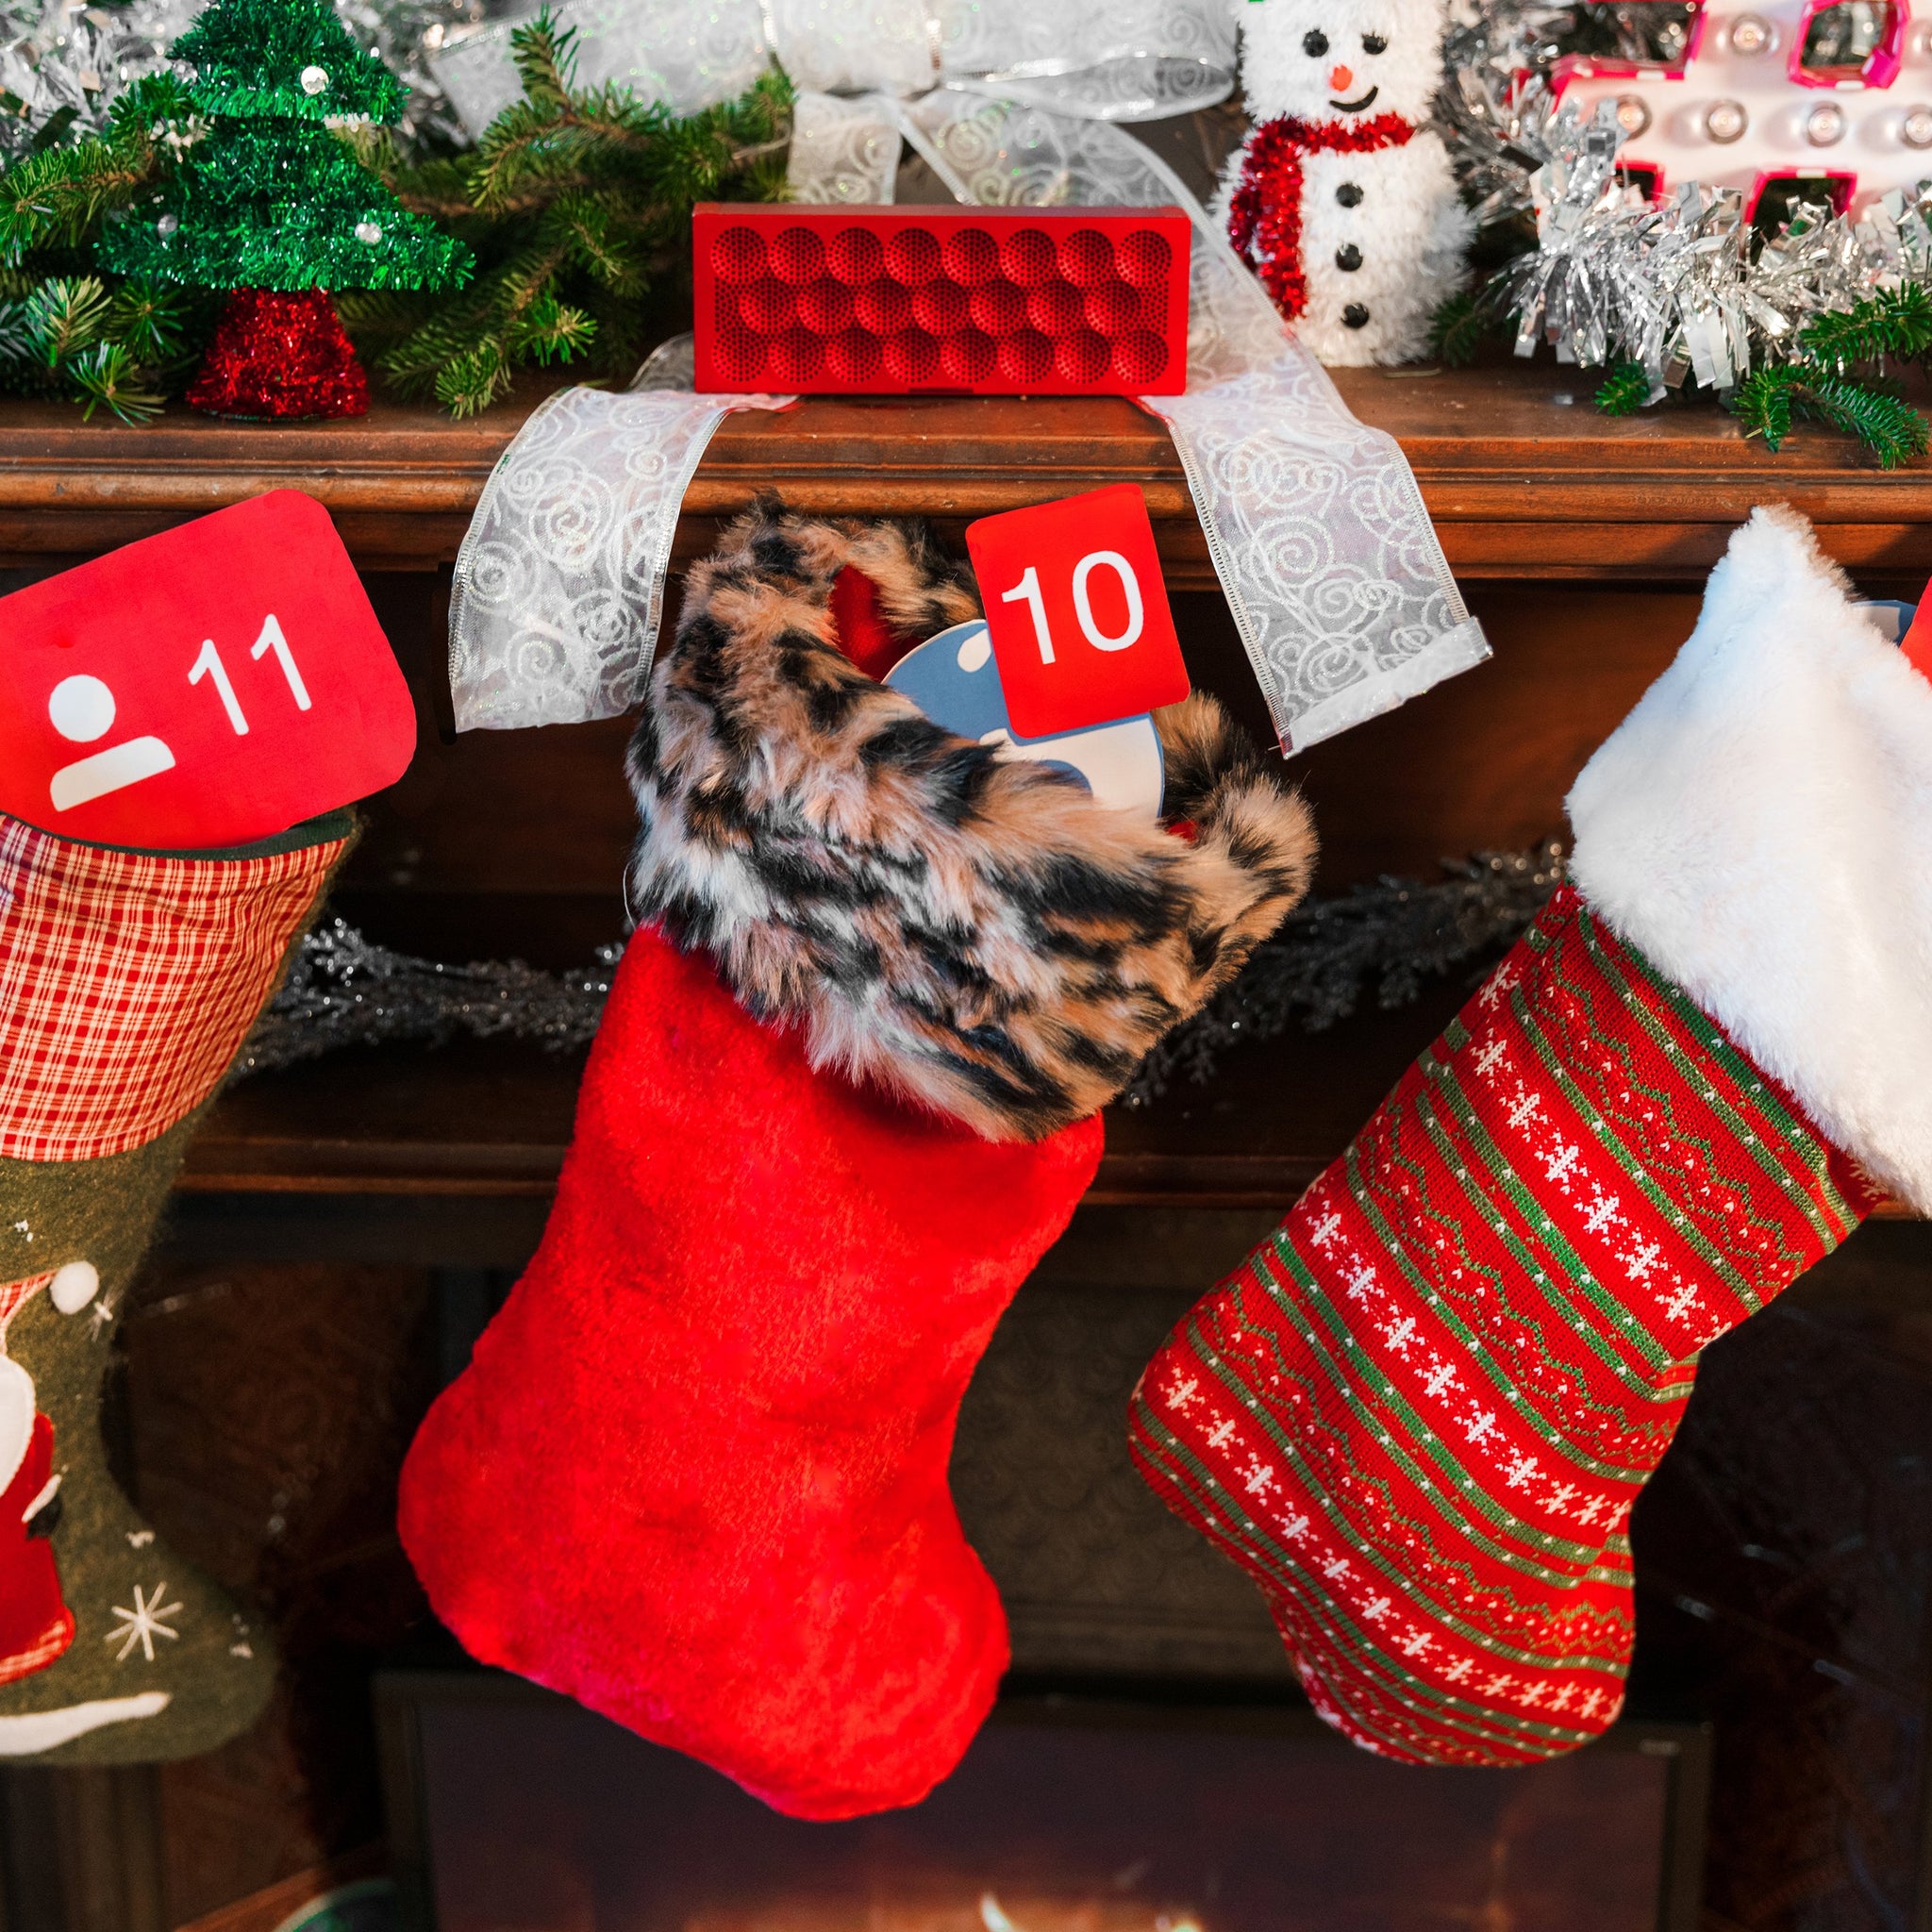 Stocking Stuffers and Secret Santa